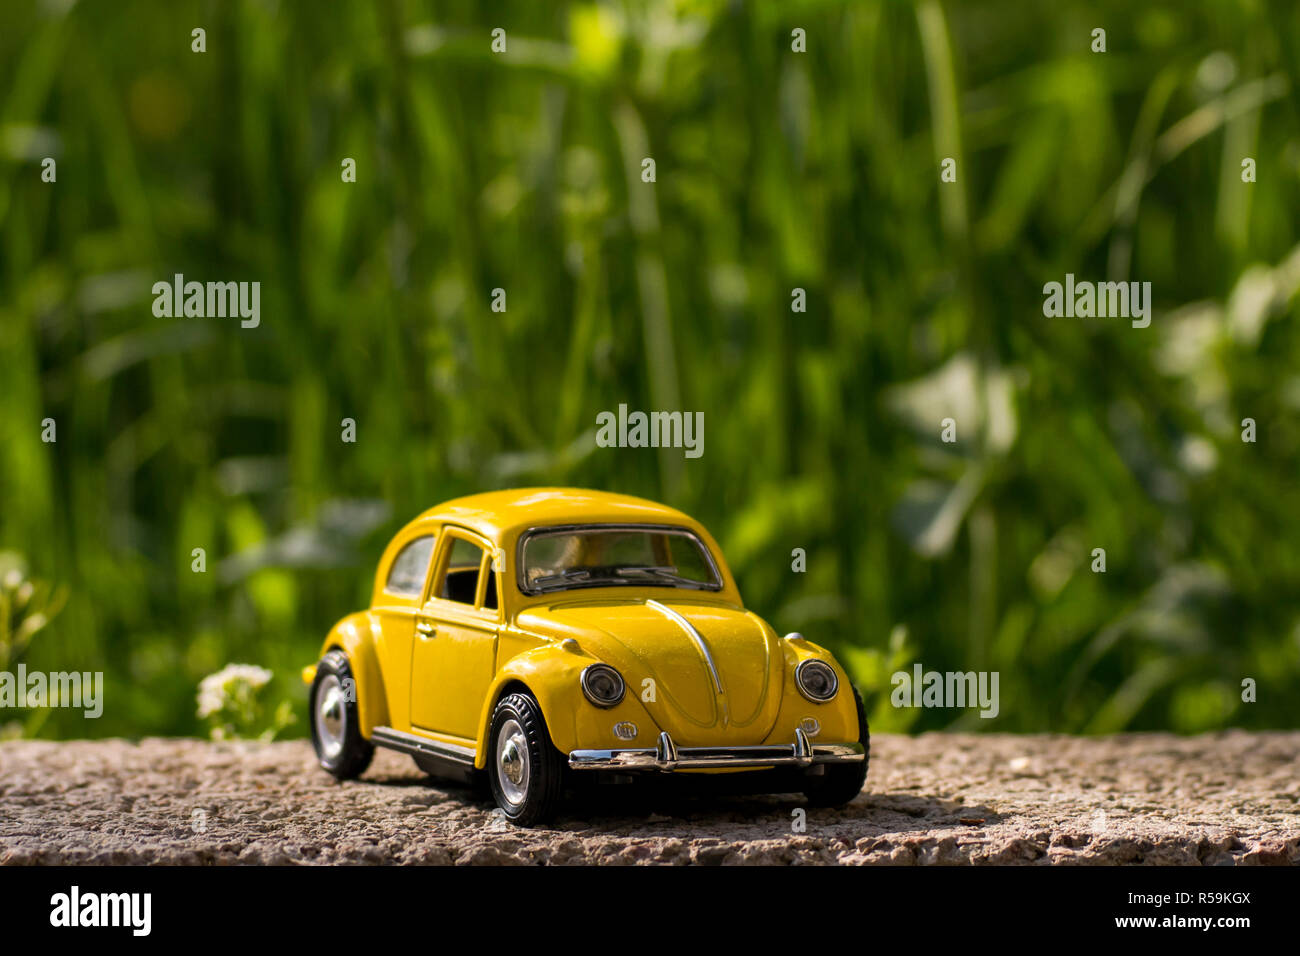 Yellow Volkswagen Beetle model car toy Stock Photo